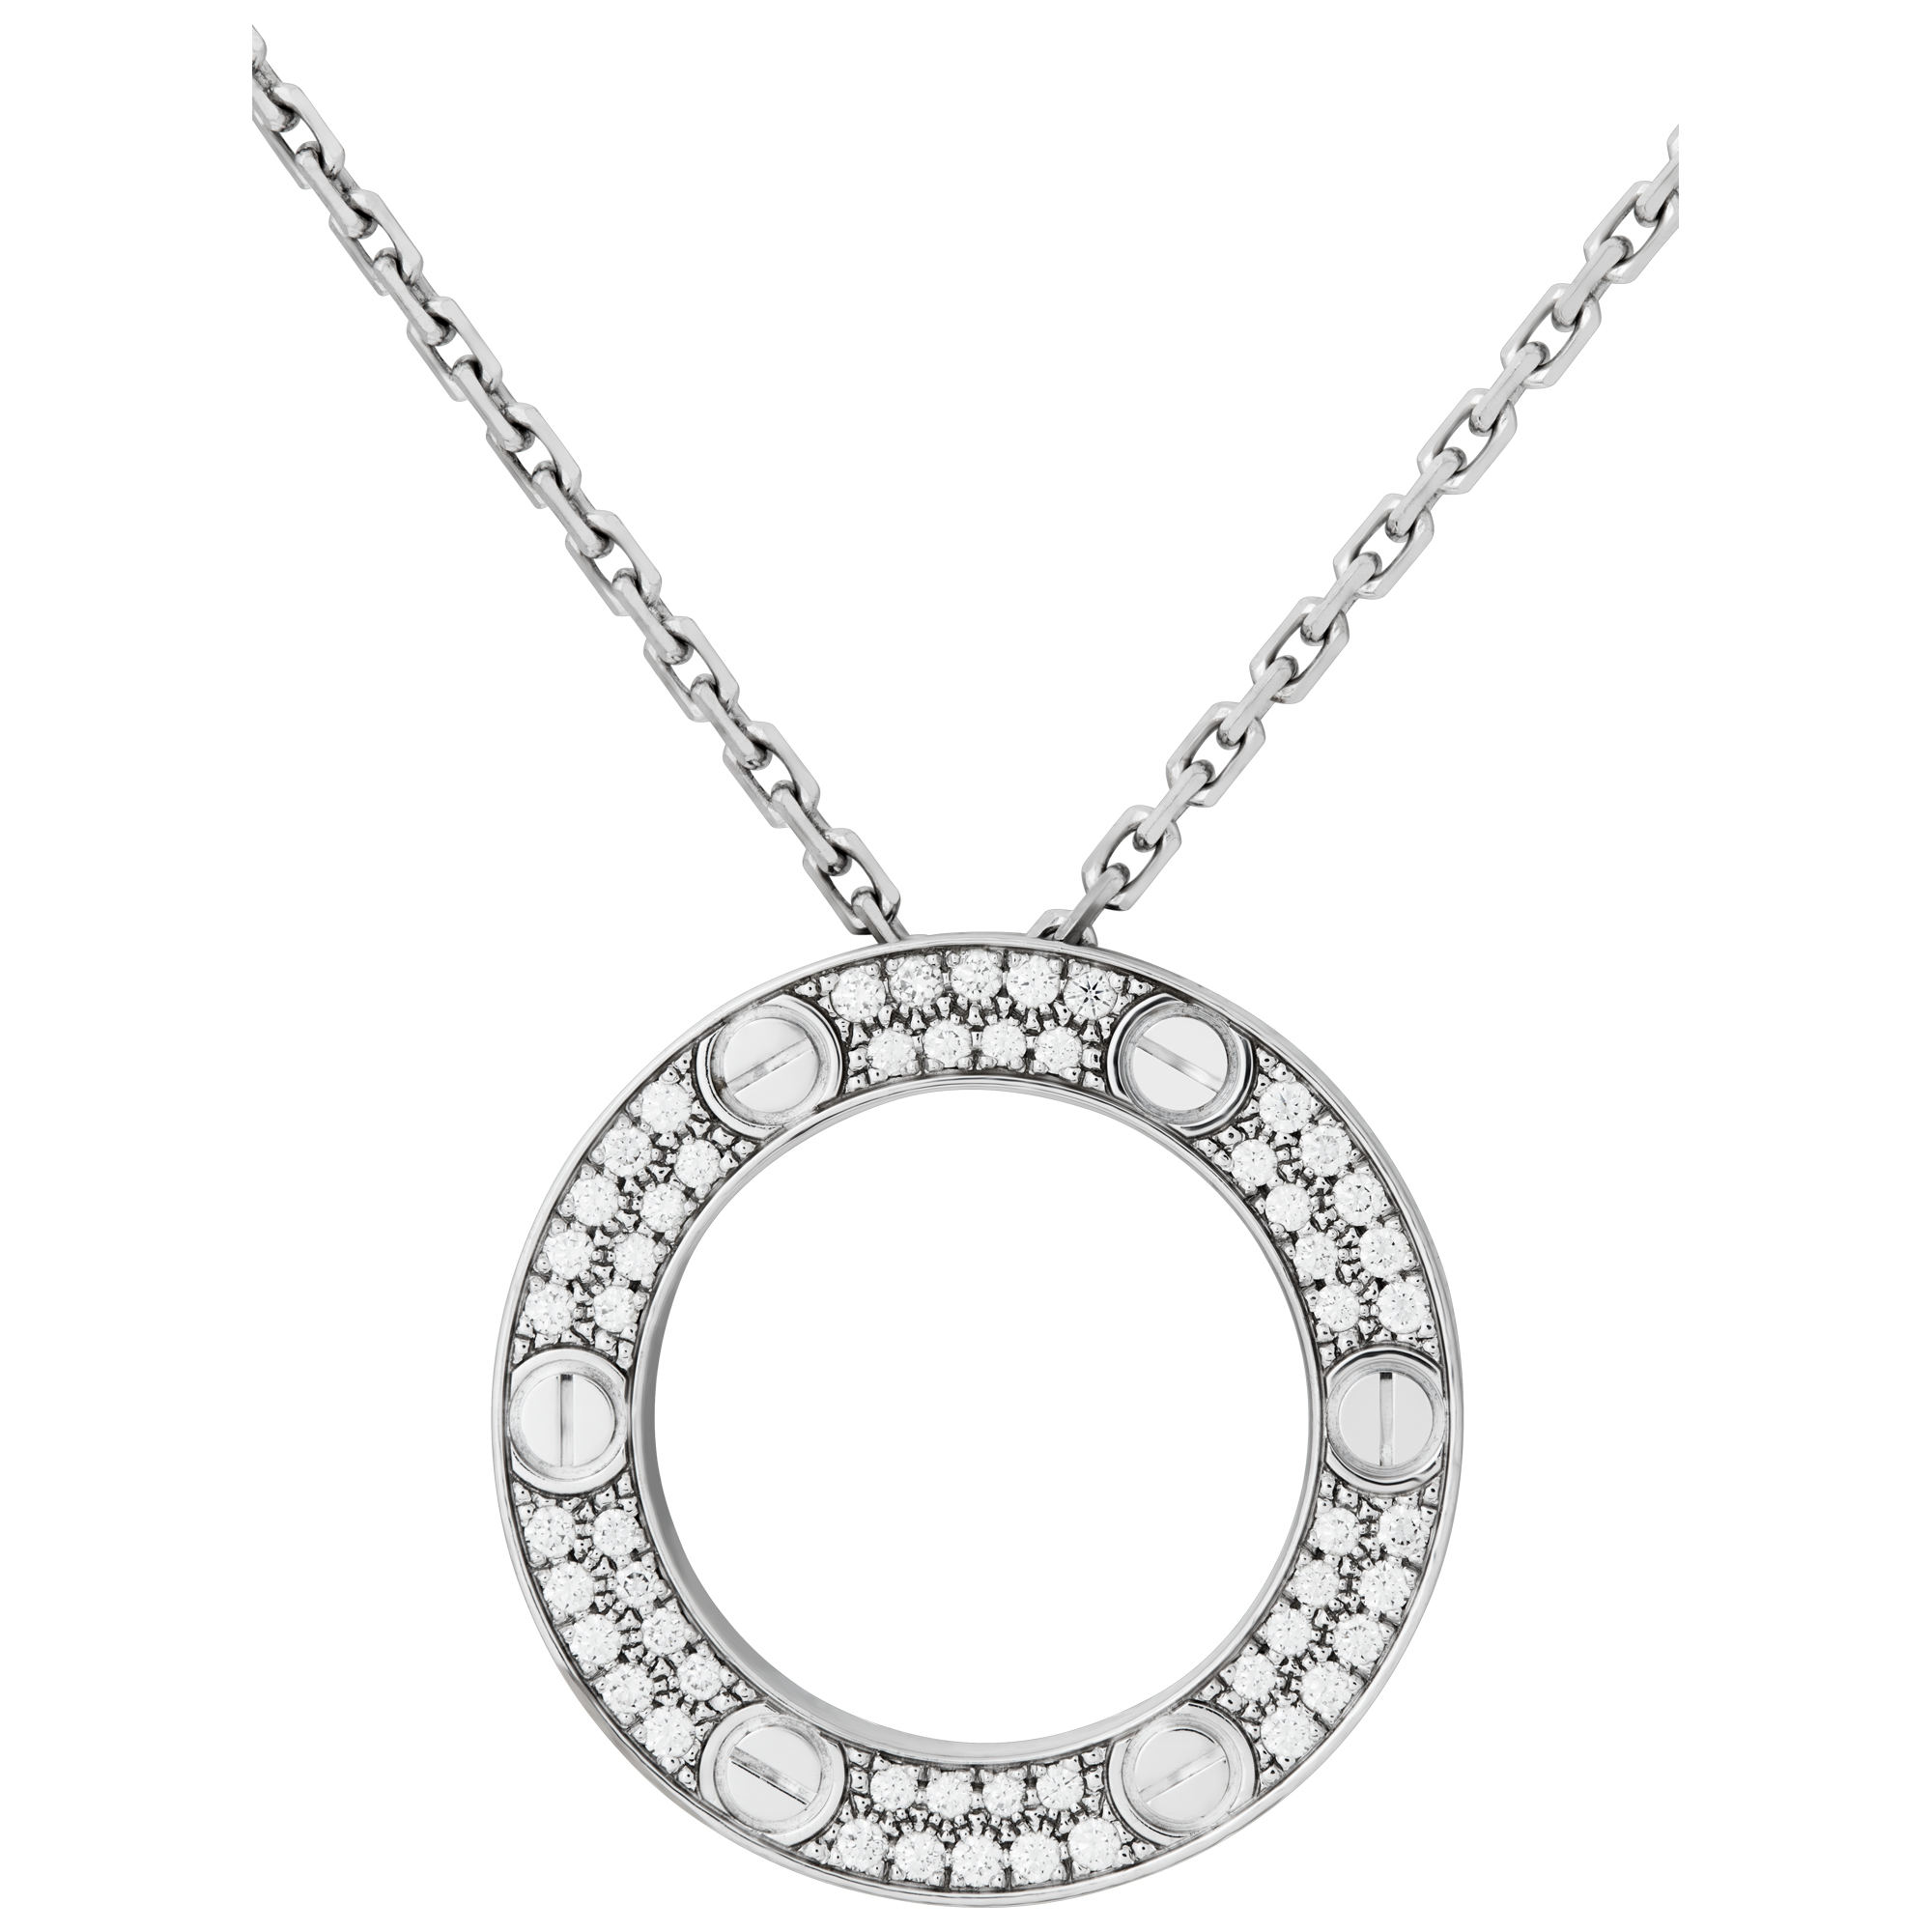 Cartier "Love" diamond pendant/necklace, in 18k white gold.